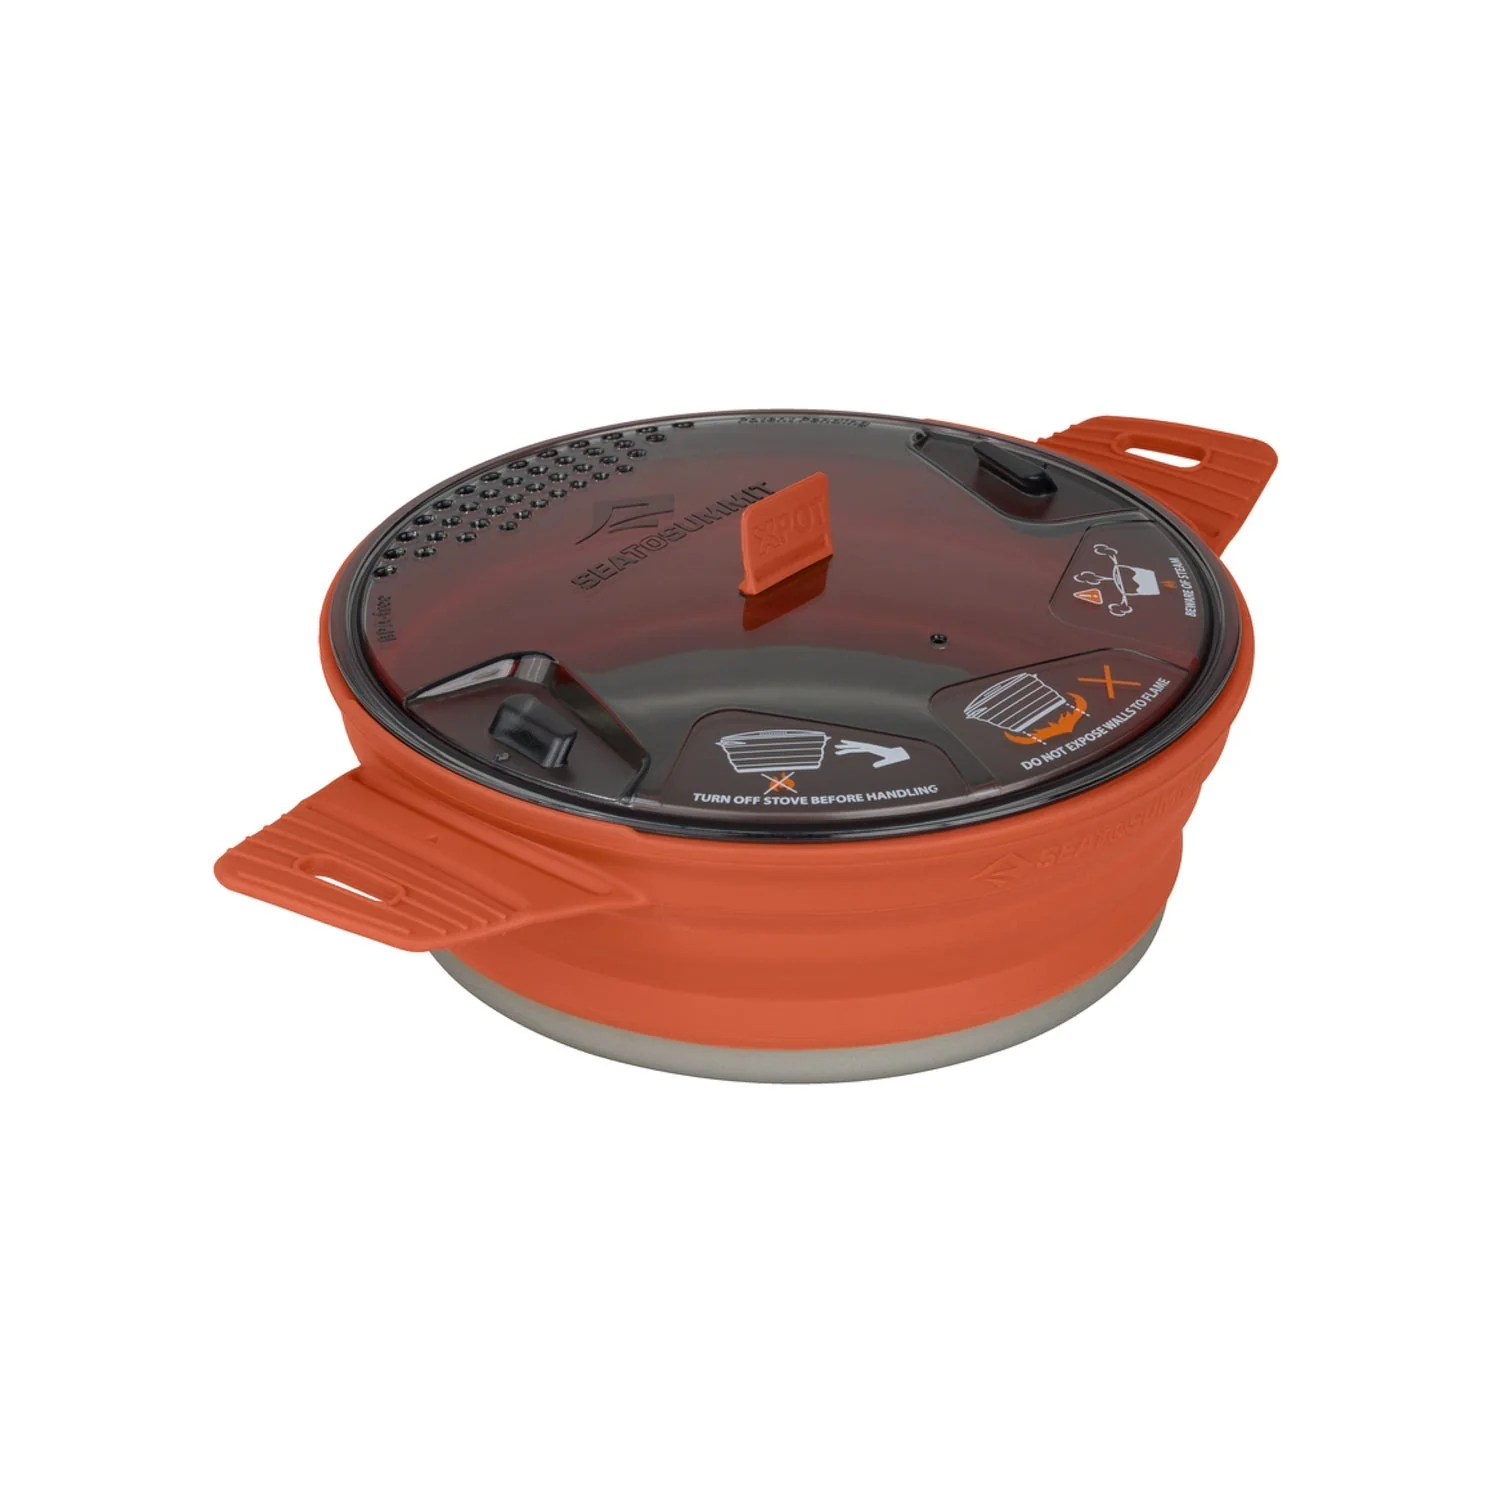 Collapsible-camp-cookware-pot-orange-rust-1.4liter